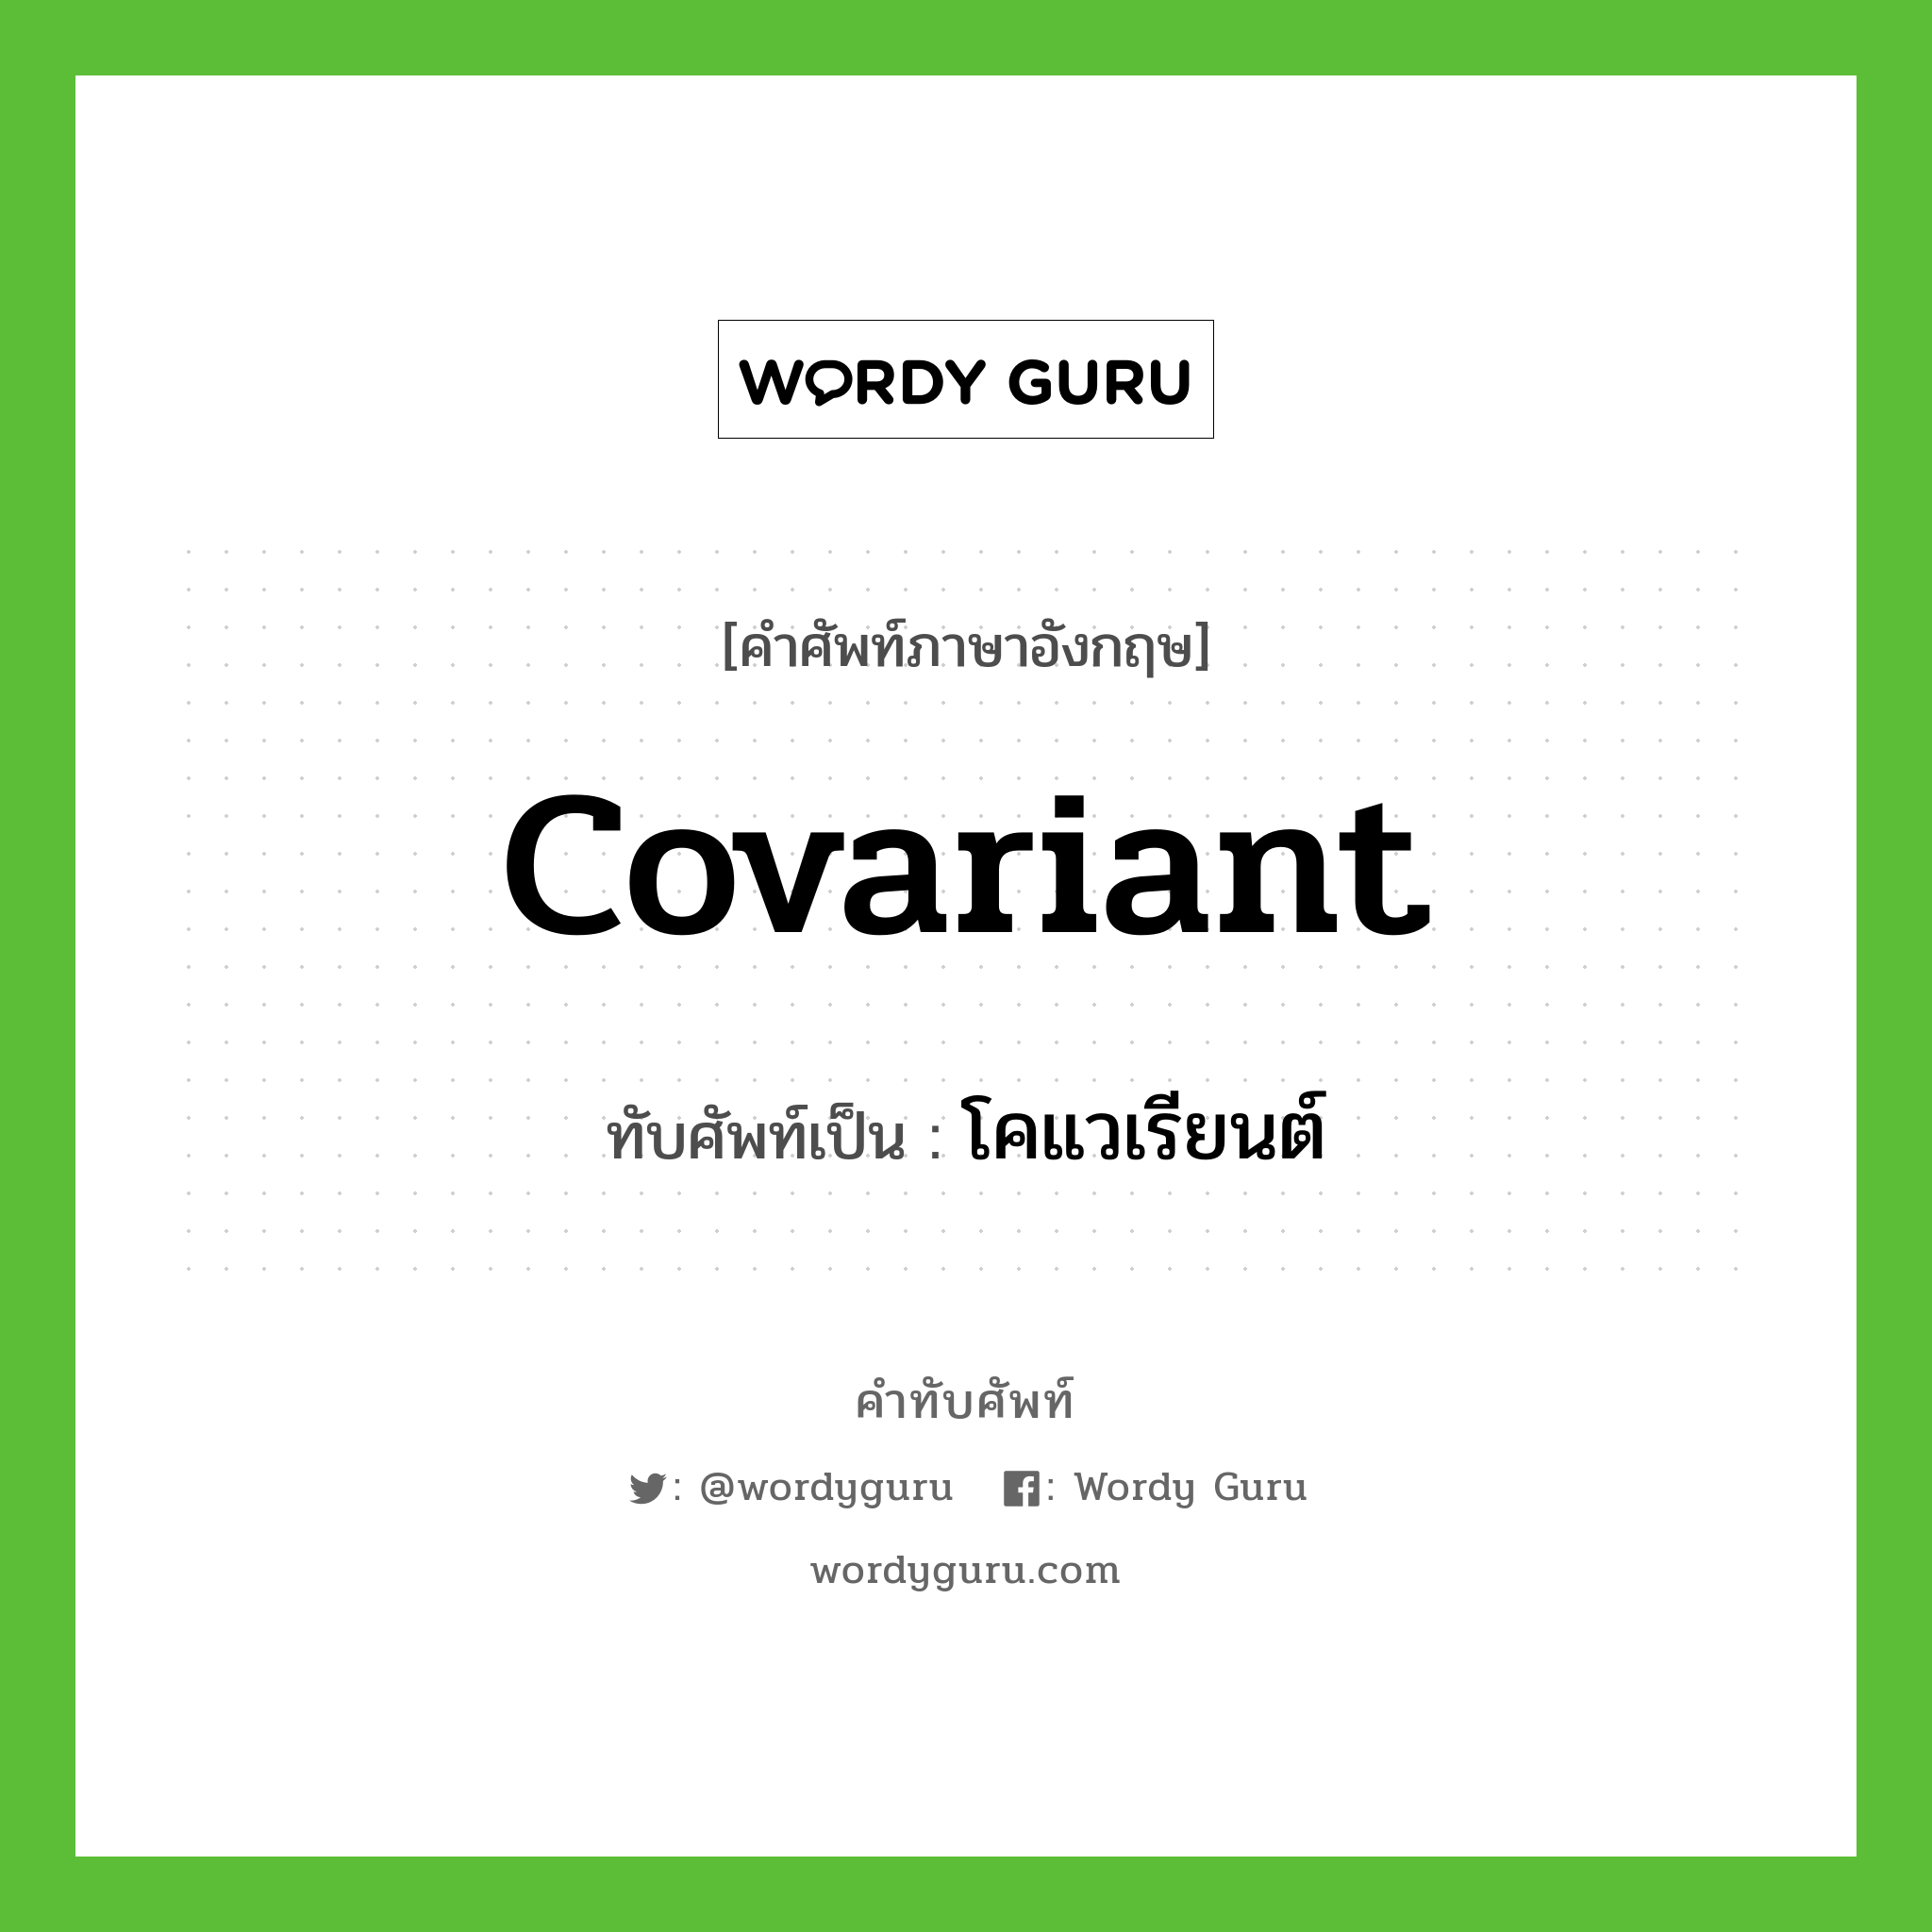 covariant เขียนเป็นคำไทยว่าอะไร?, คำศัพท์ภาษาอังกฤษ covariant ทับศัพท์เป็น โคแวเรียนต์